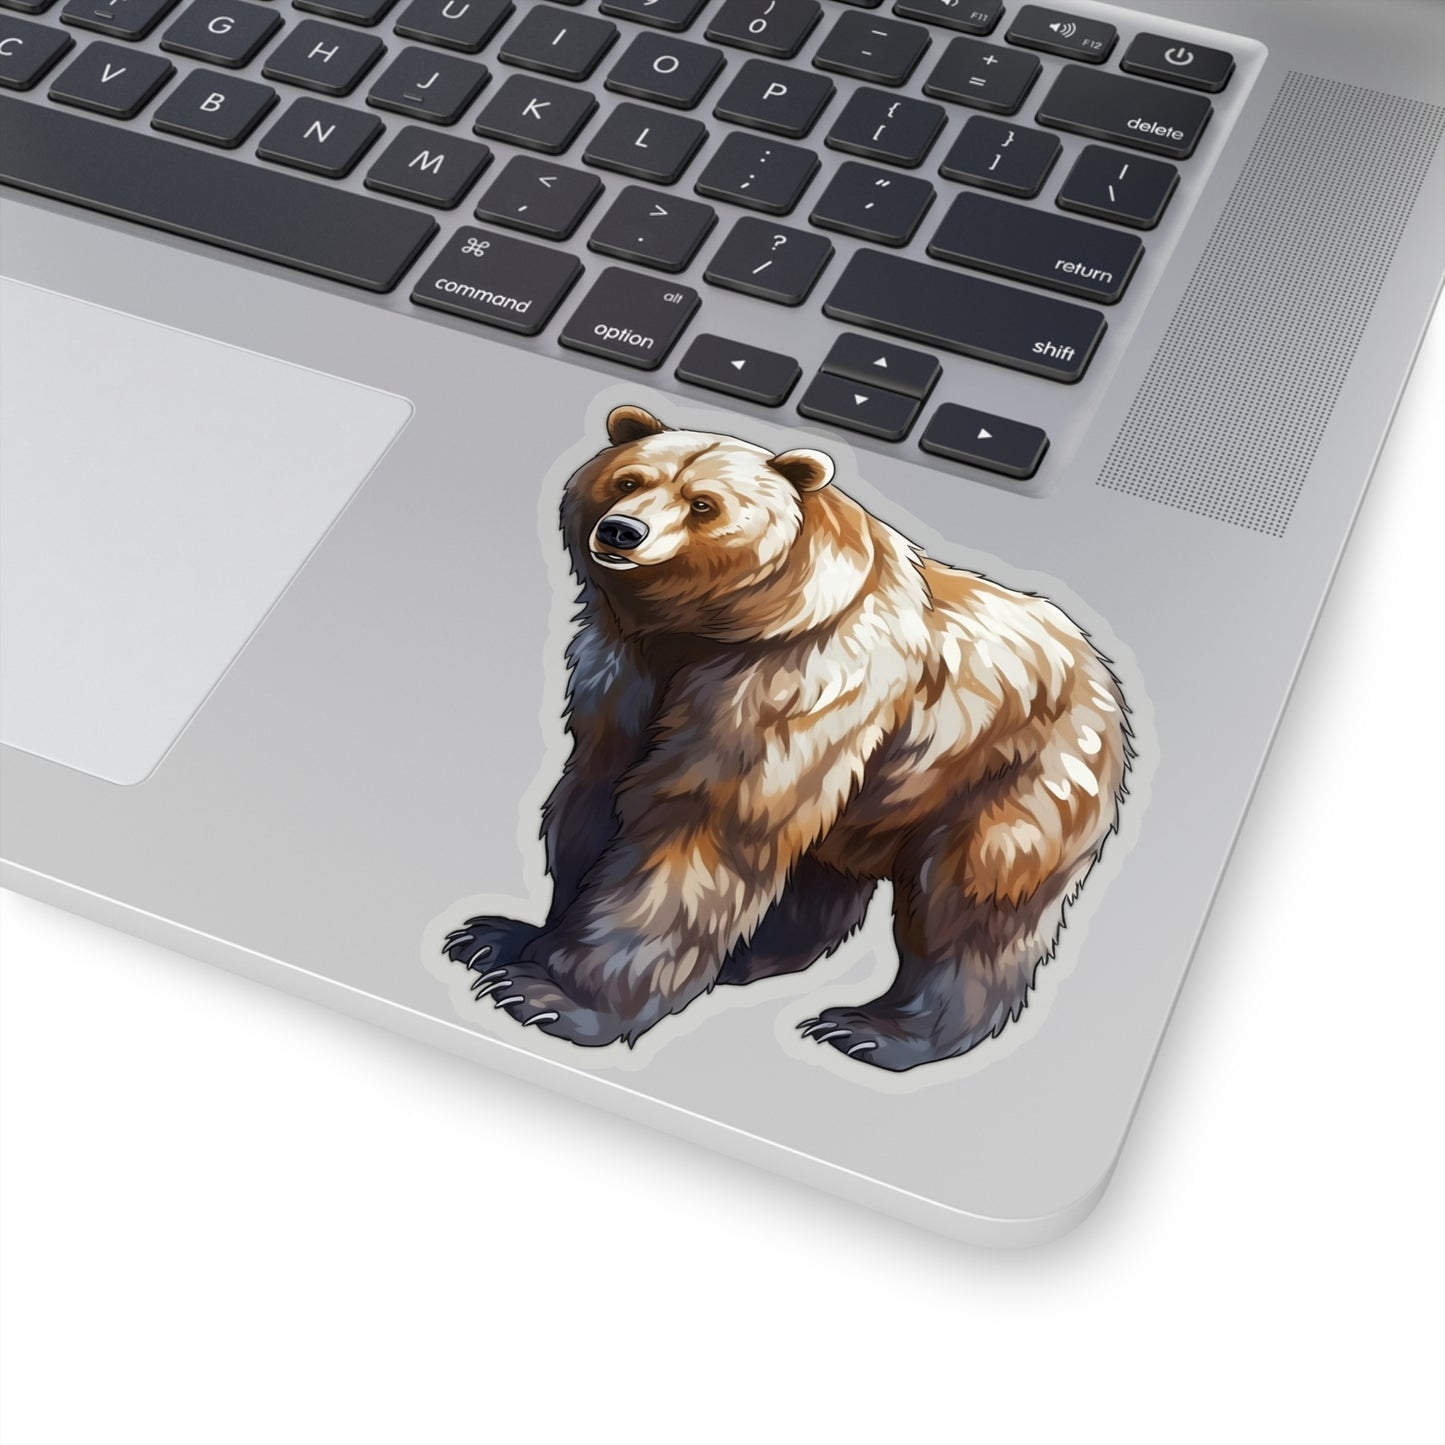 Grizzly Bear Sticker Decal, Animal Art Vinyl Laptop Cute Waterbottle Tumbler Car Waterproof Bumper Clear Aesthetic Die Cut Wall